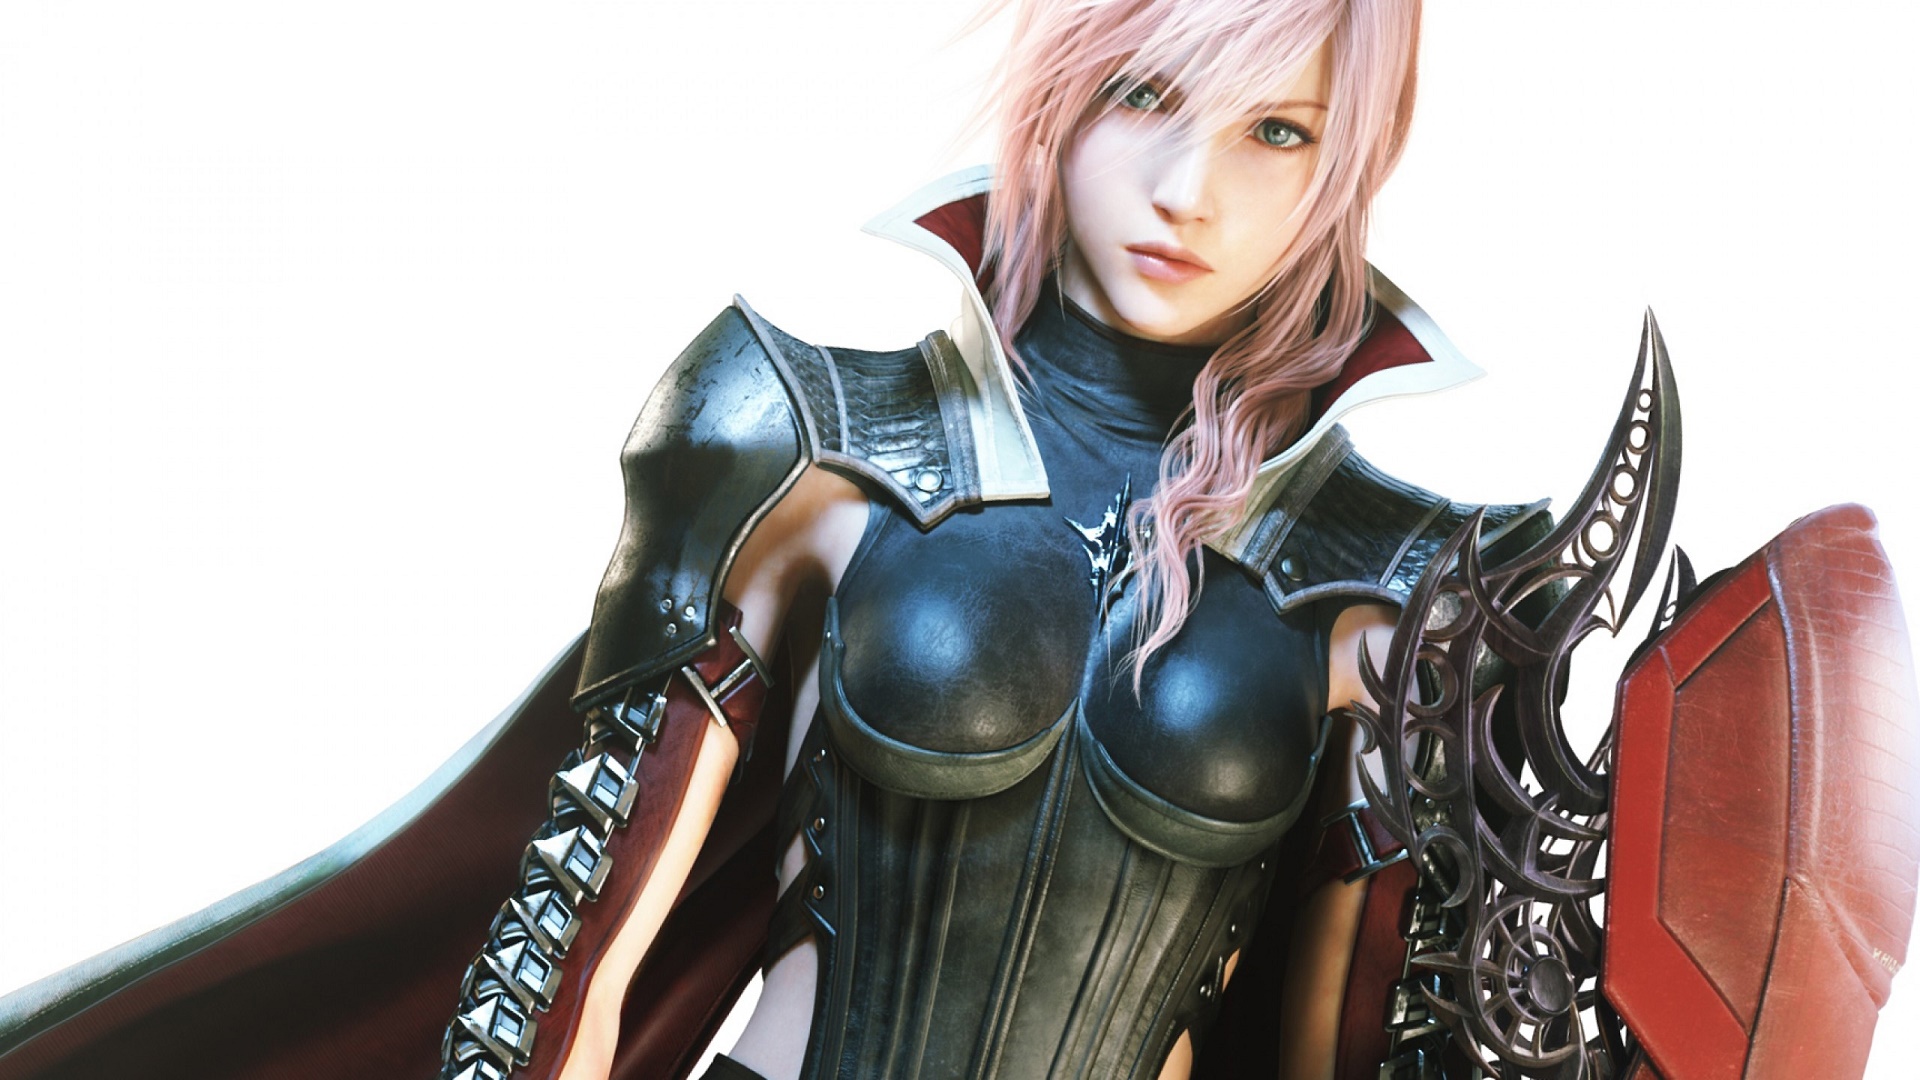 Video Game Lightning Returns: Final Fantasy XIII HD Wallpaper Background Im...